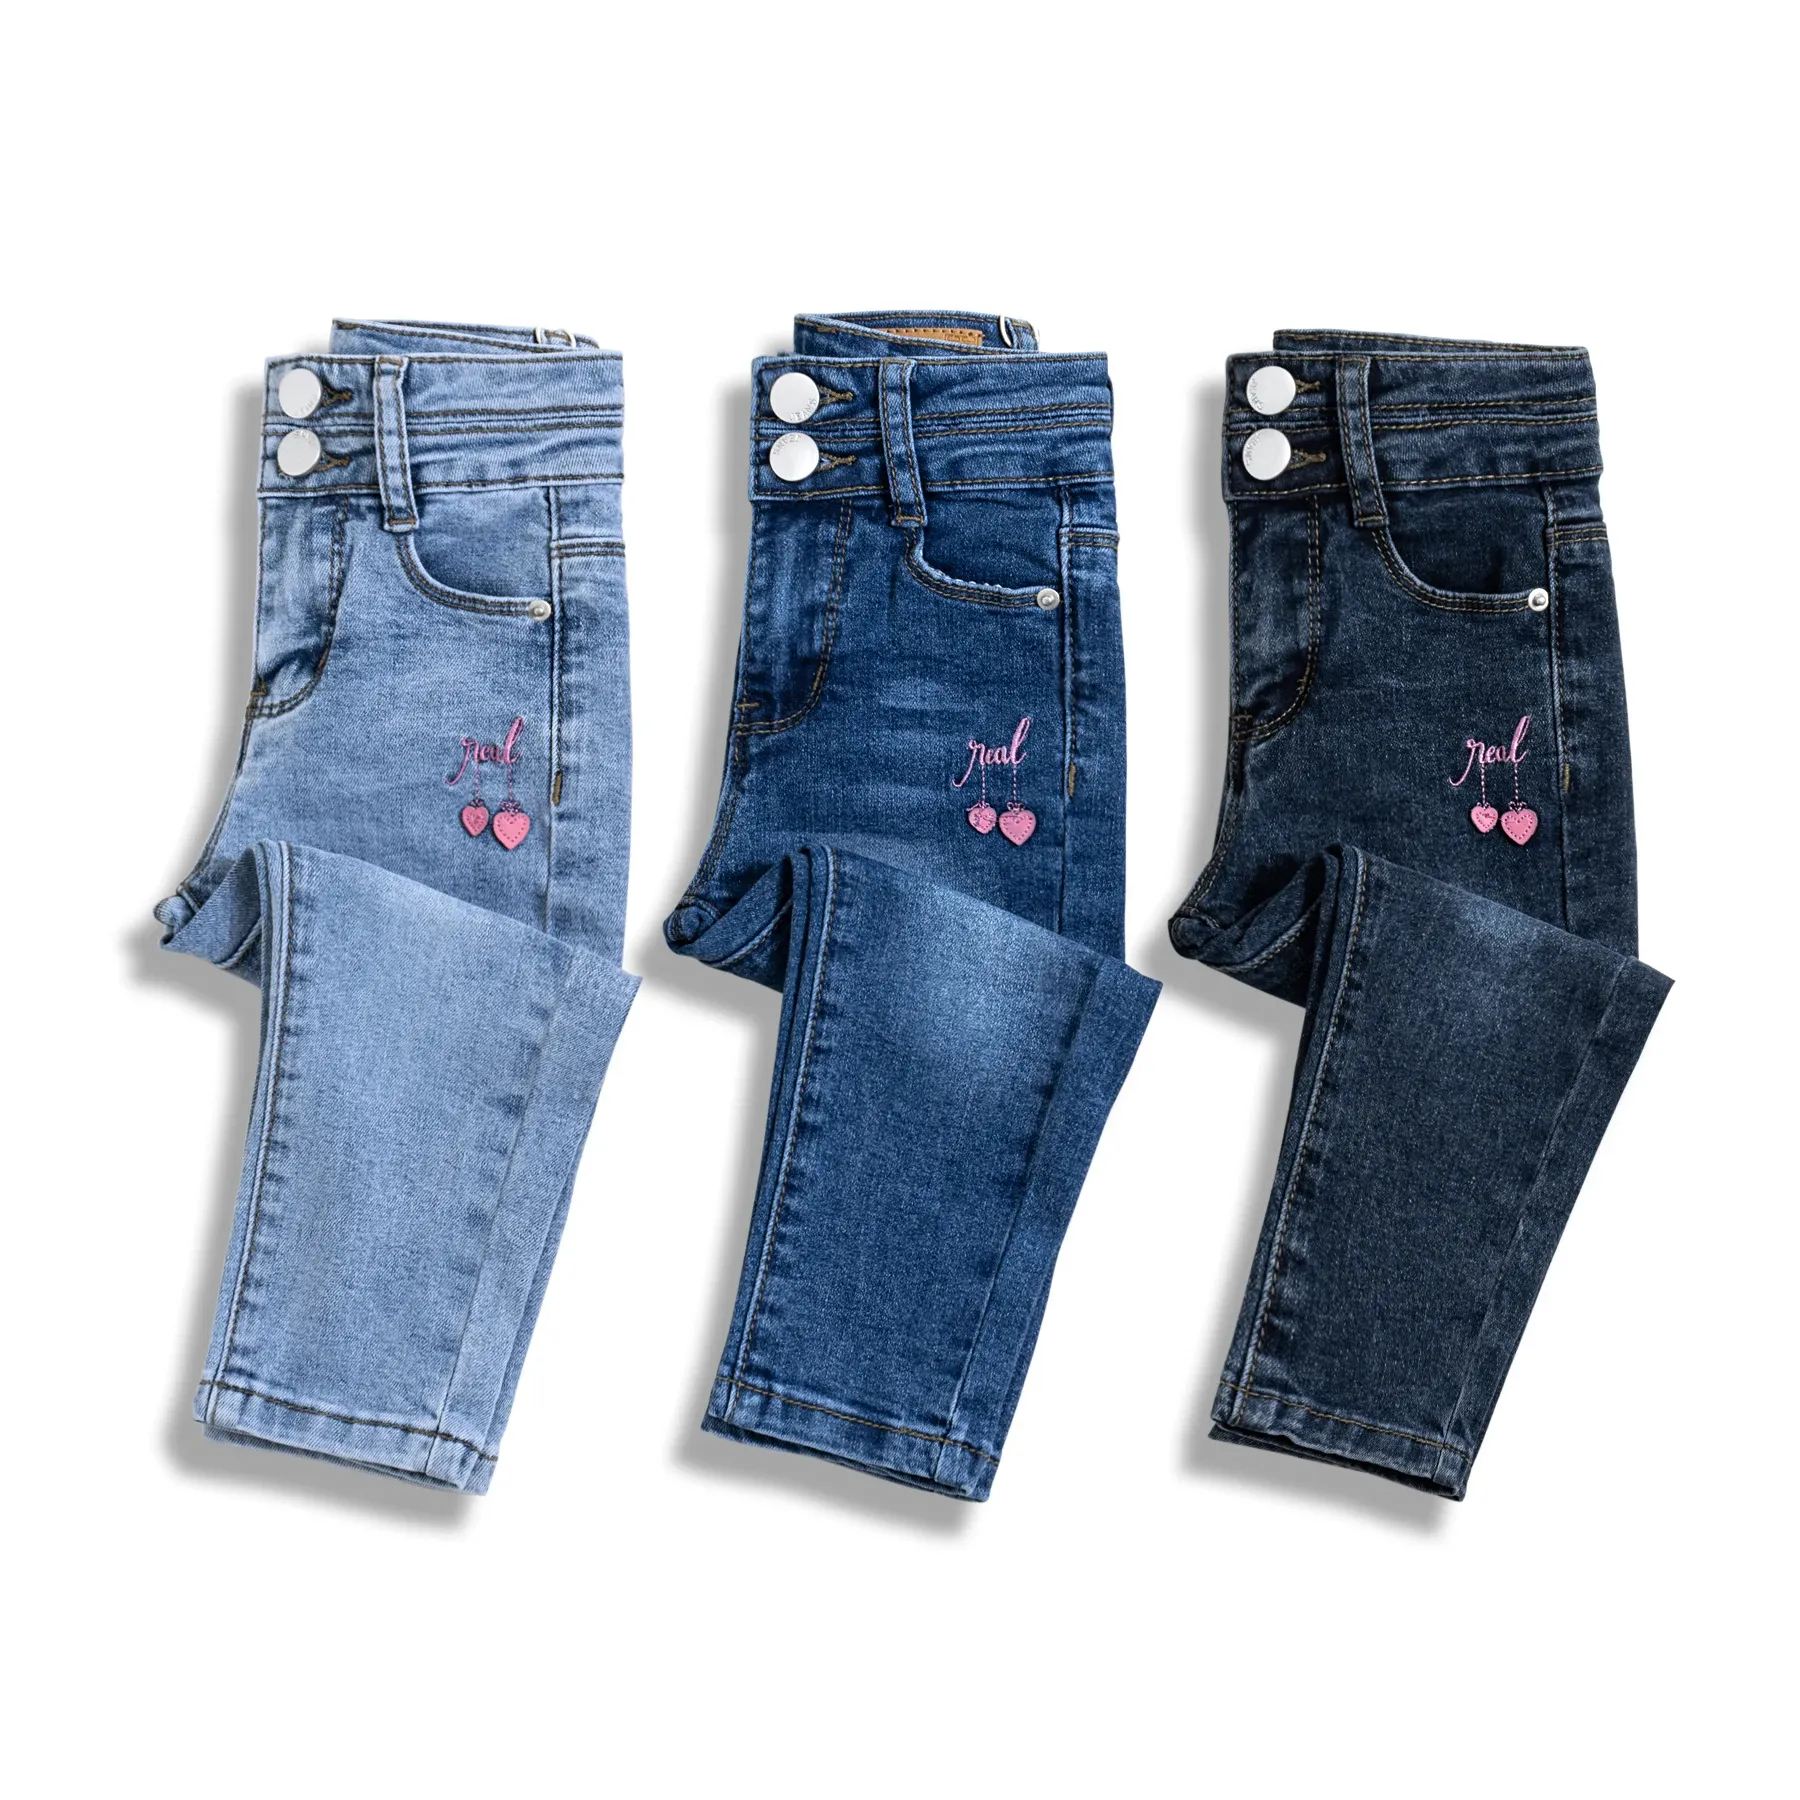 Jeans pour enfants meninas roupas menino e menina jeans roupas para crianças adolescentes